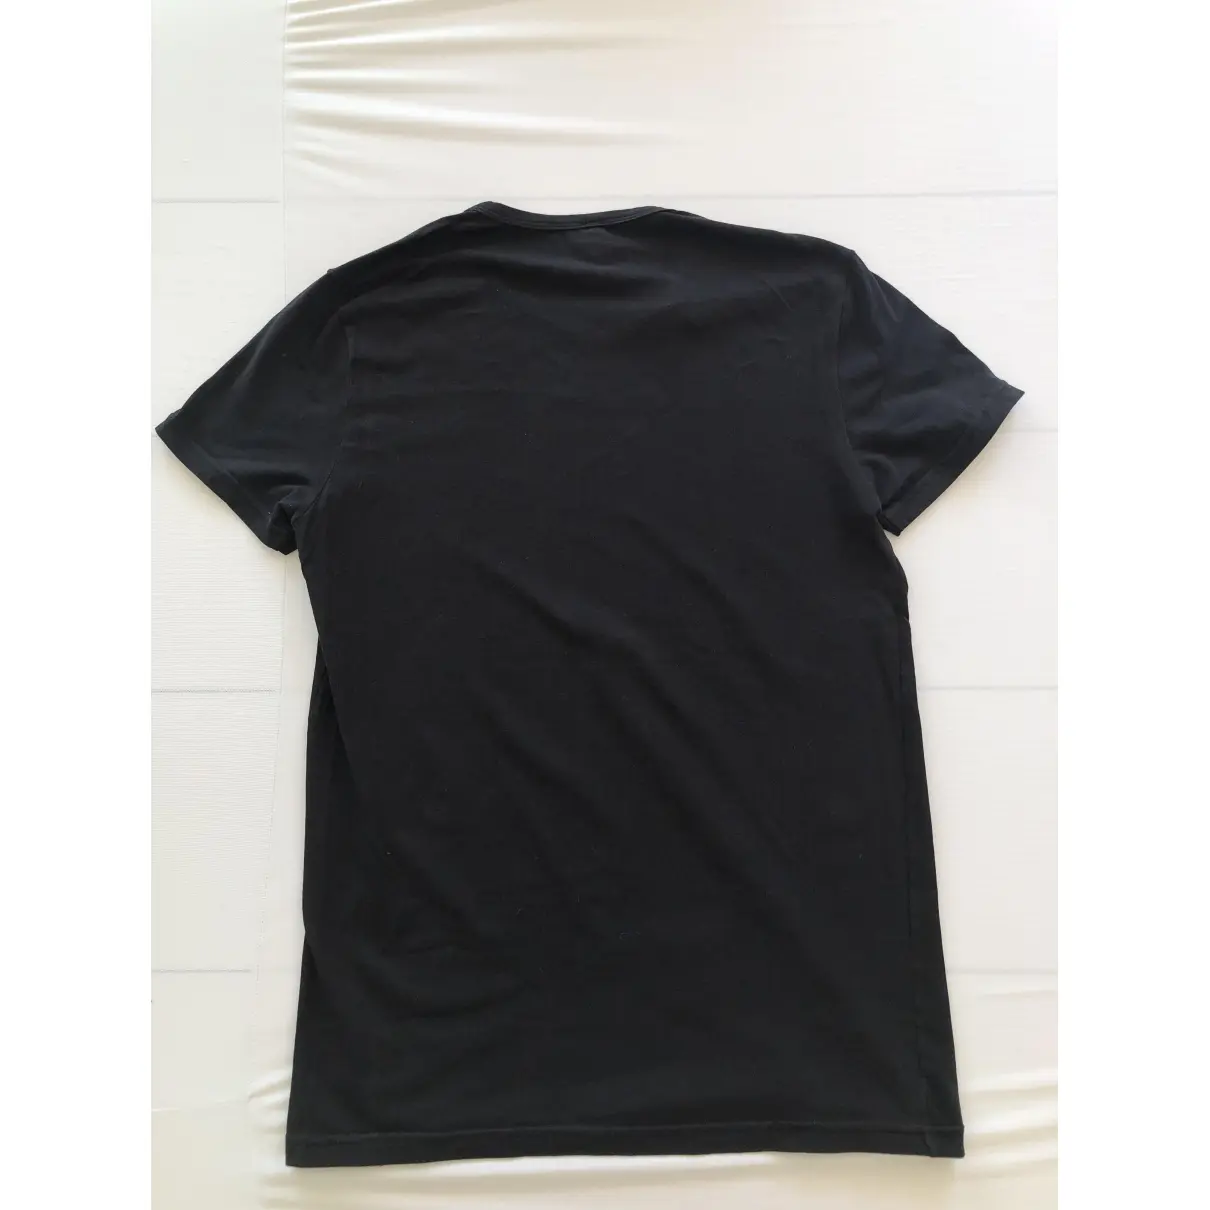 Buy John Galliano Black Cotton T-shirt online